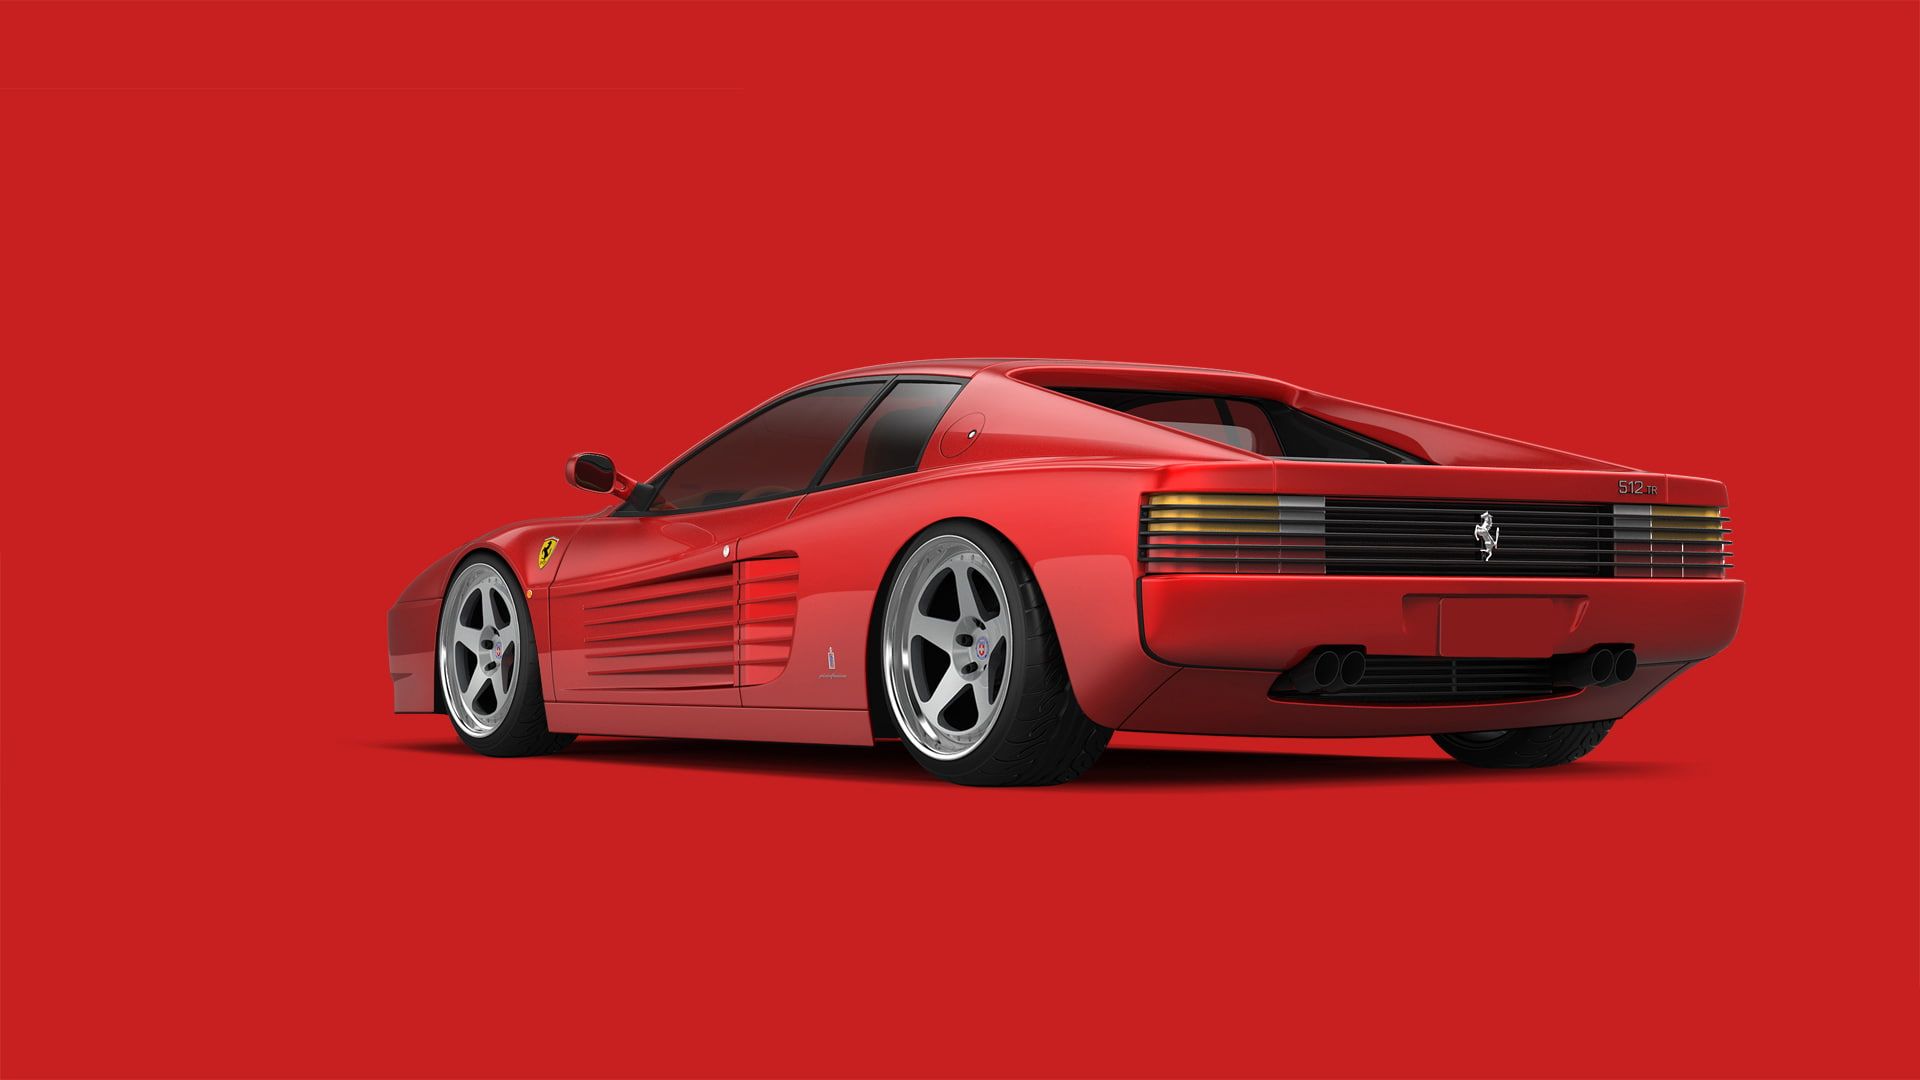 Red Supercar Ferrari Testarossa Tr 1080p Wallpaper